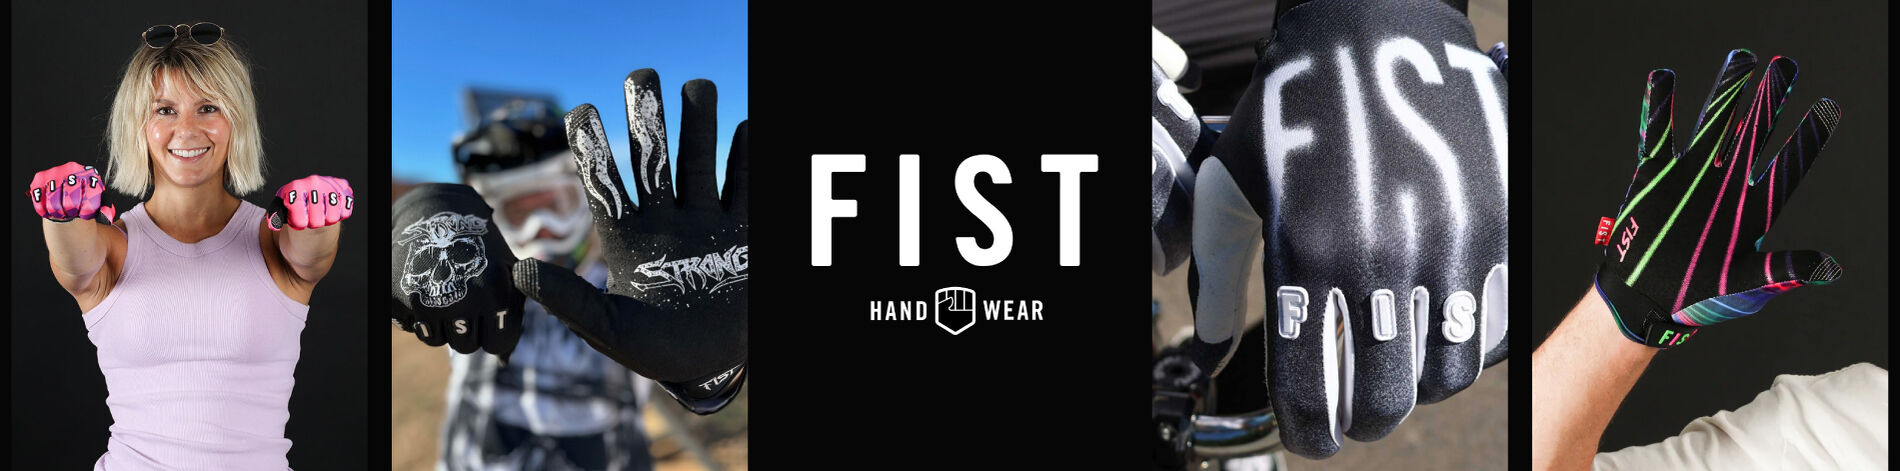 Fist Hand Wear